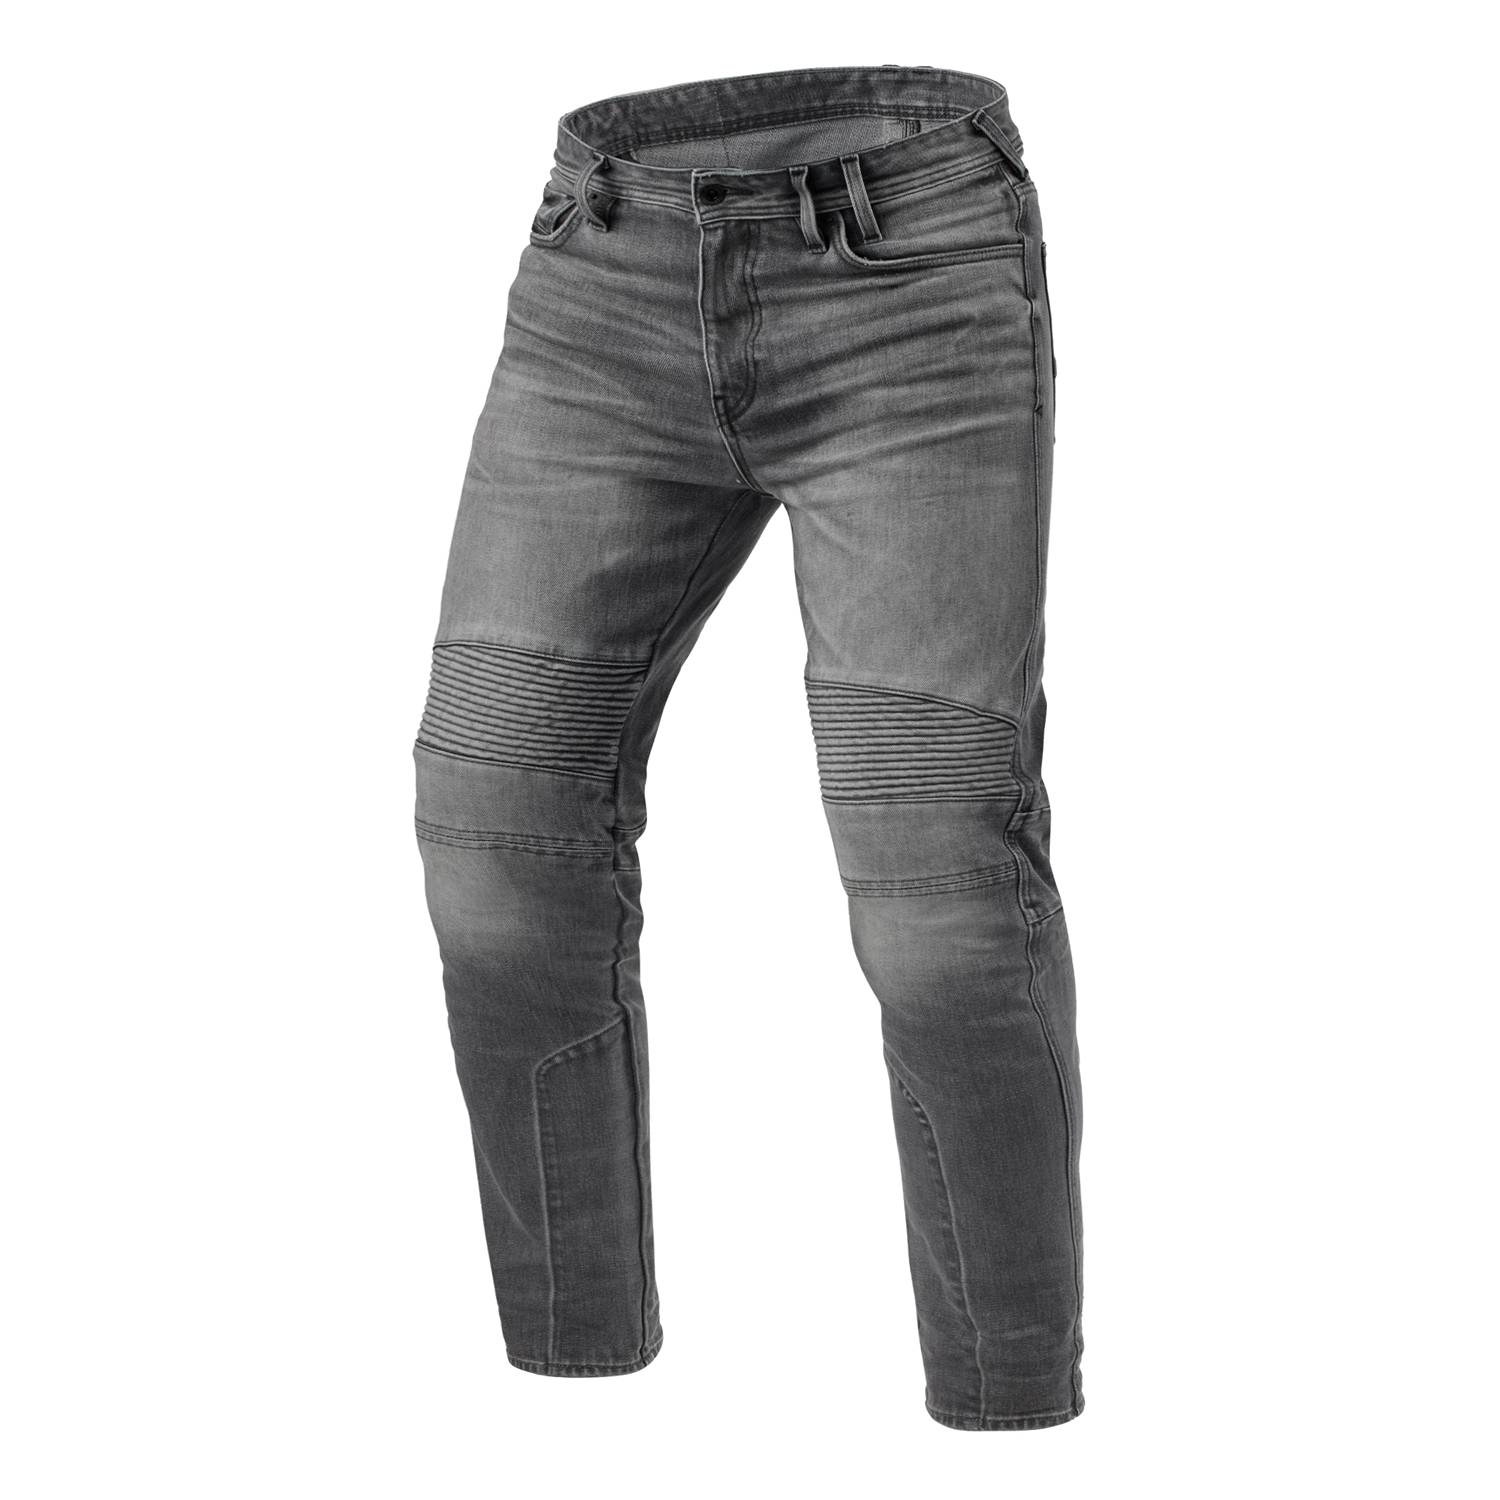 Image of REV'IT! Jeans Moto 2 TF Medium Grey Used L34 Motorcycle Jeans Talla L34/W30